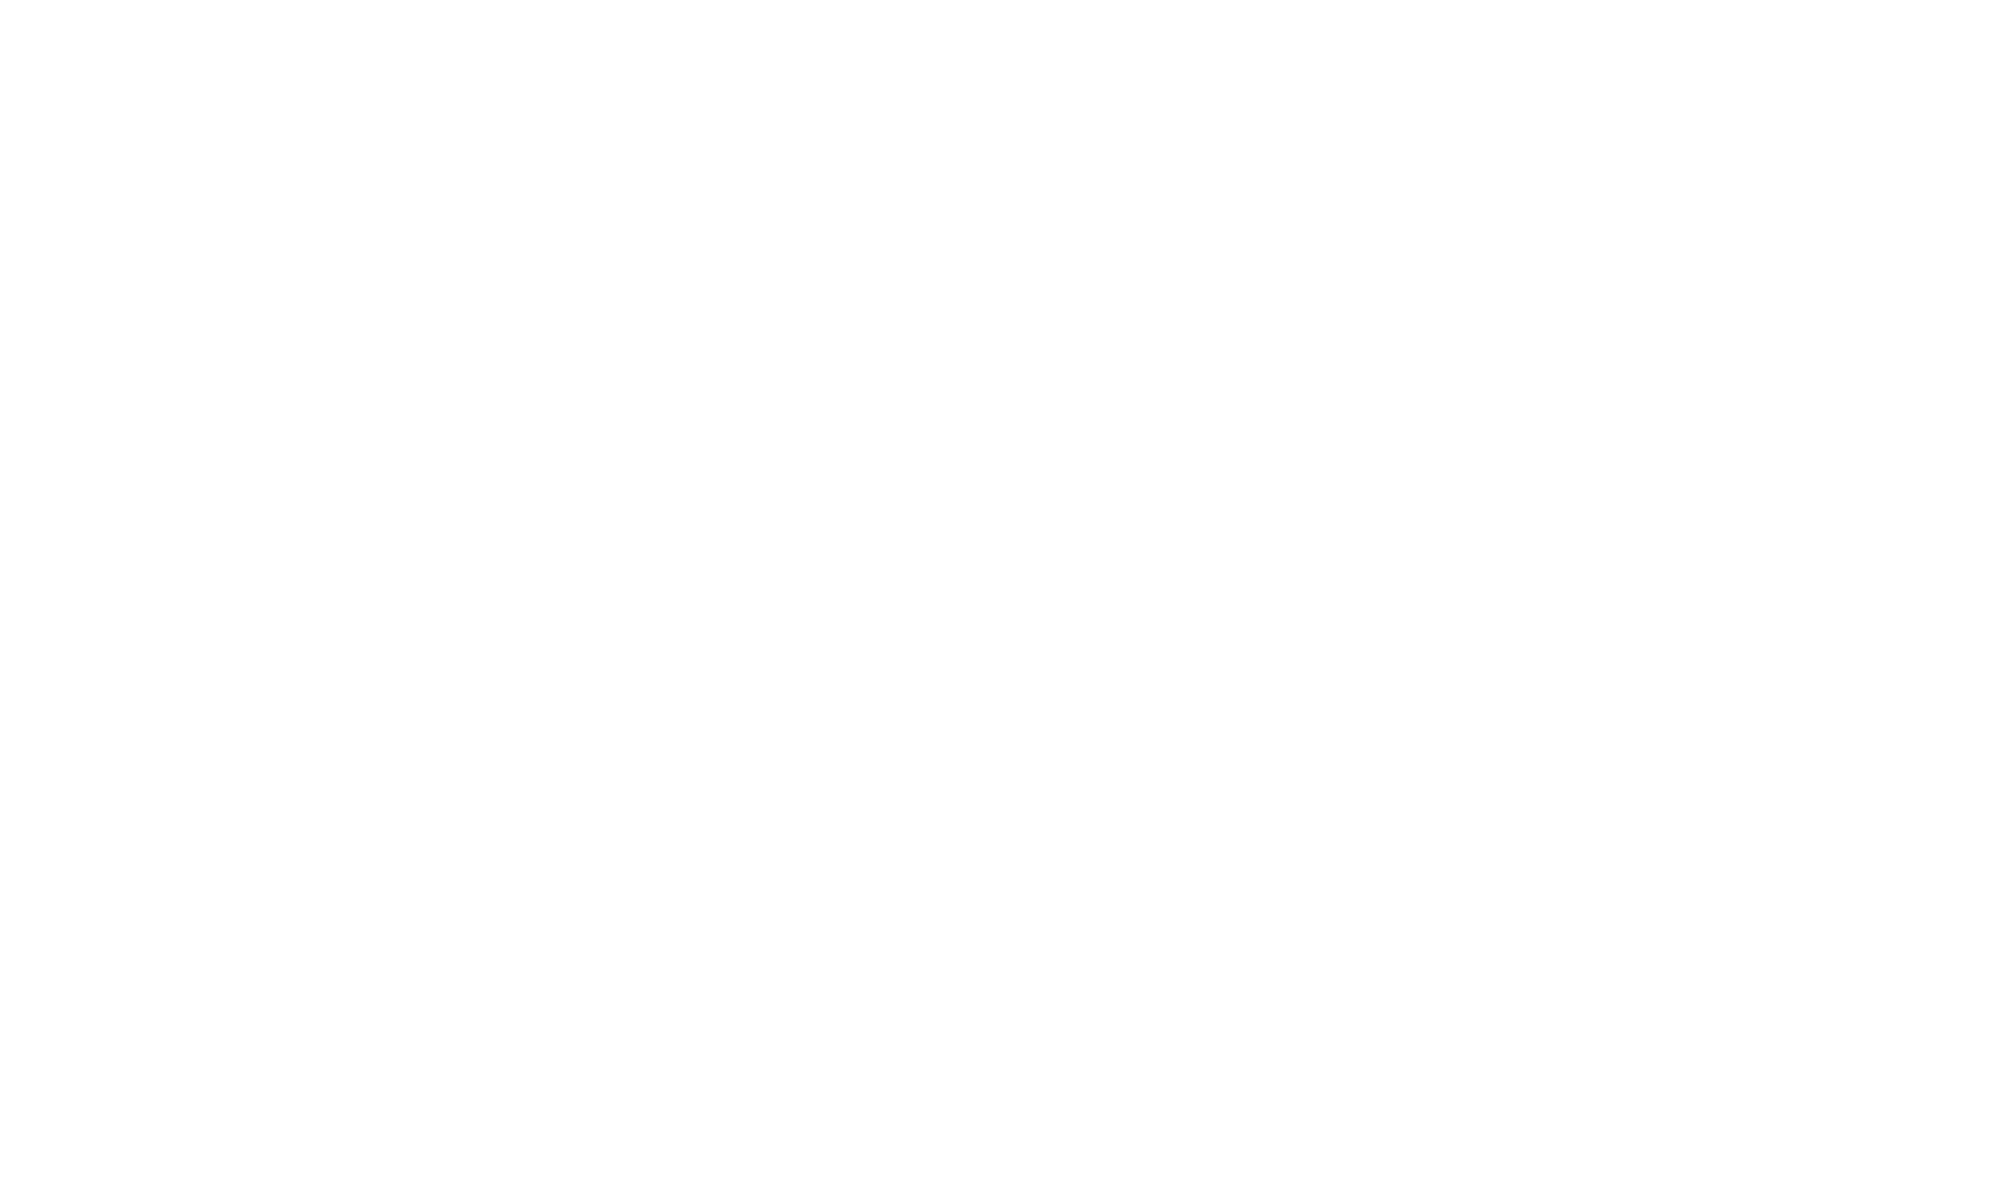 Mid atlantic arts logo white